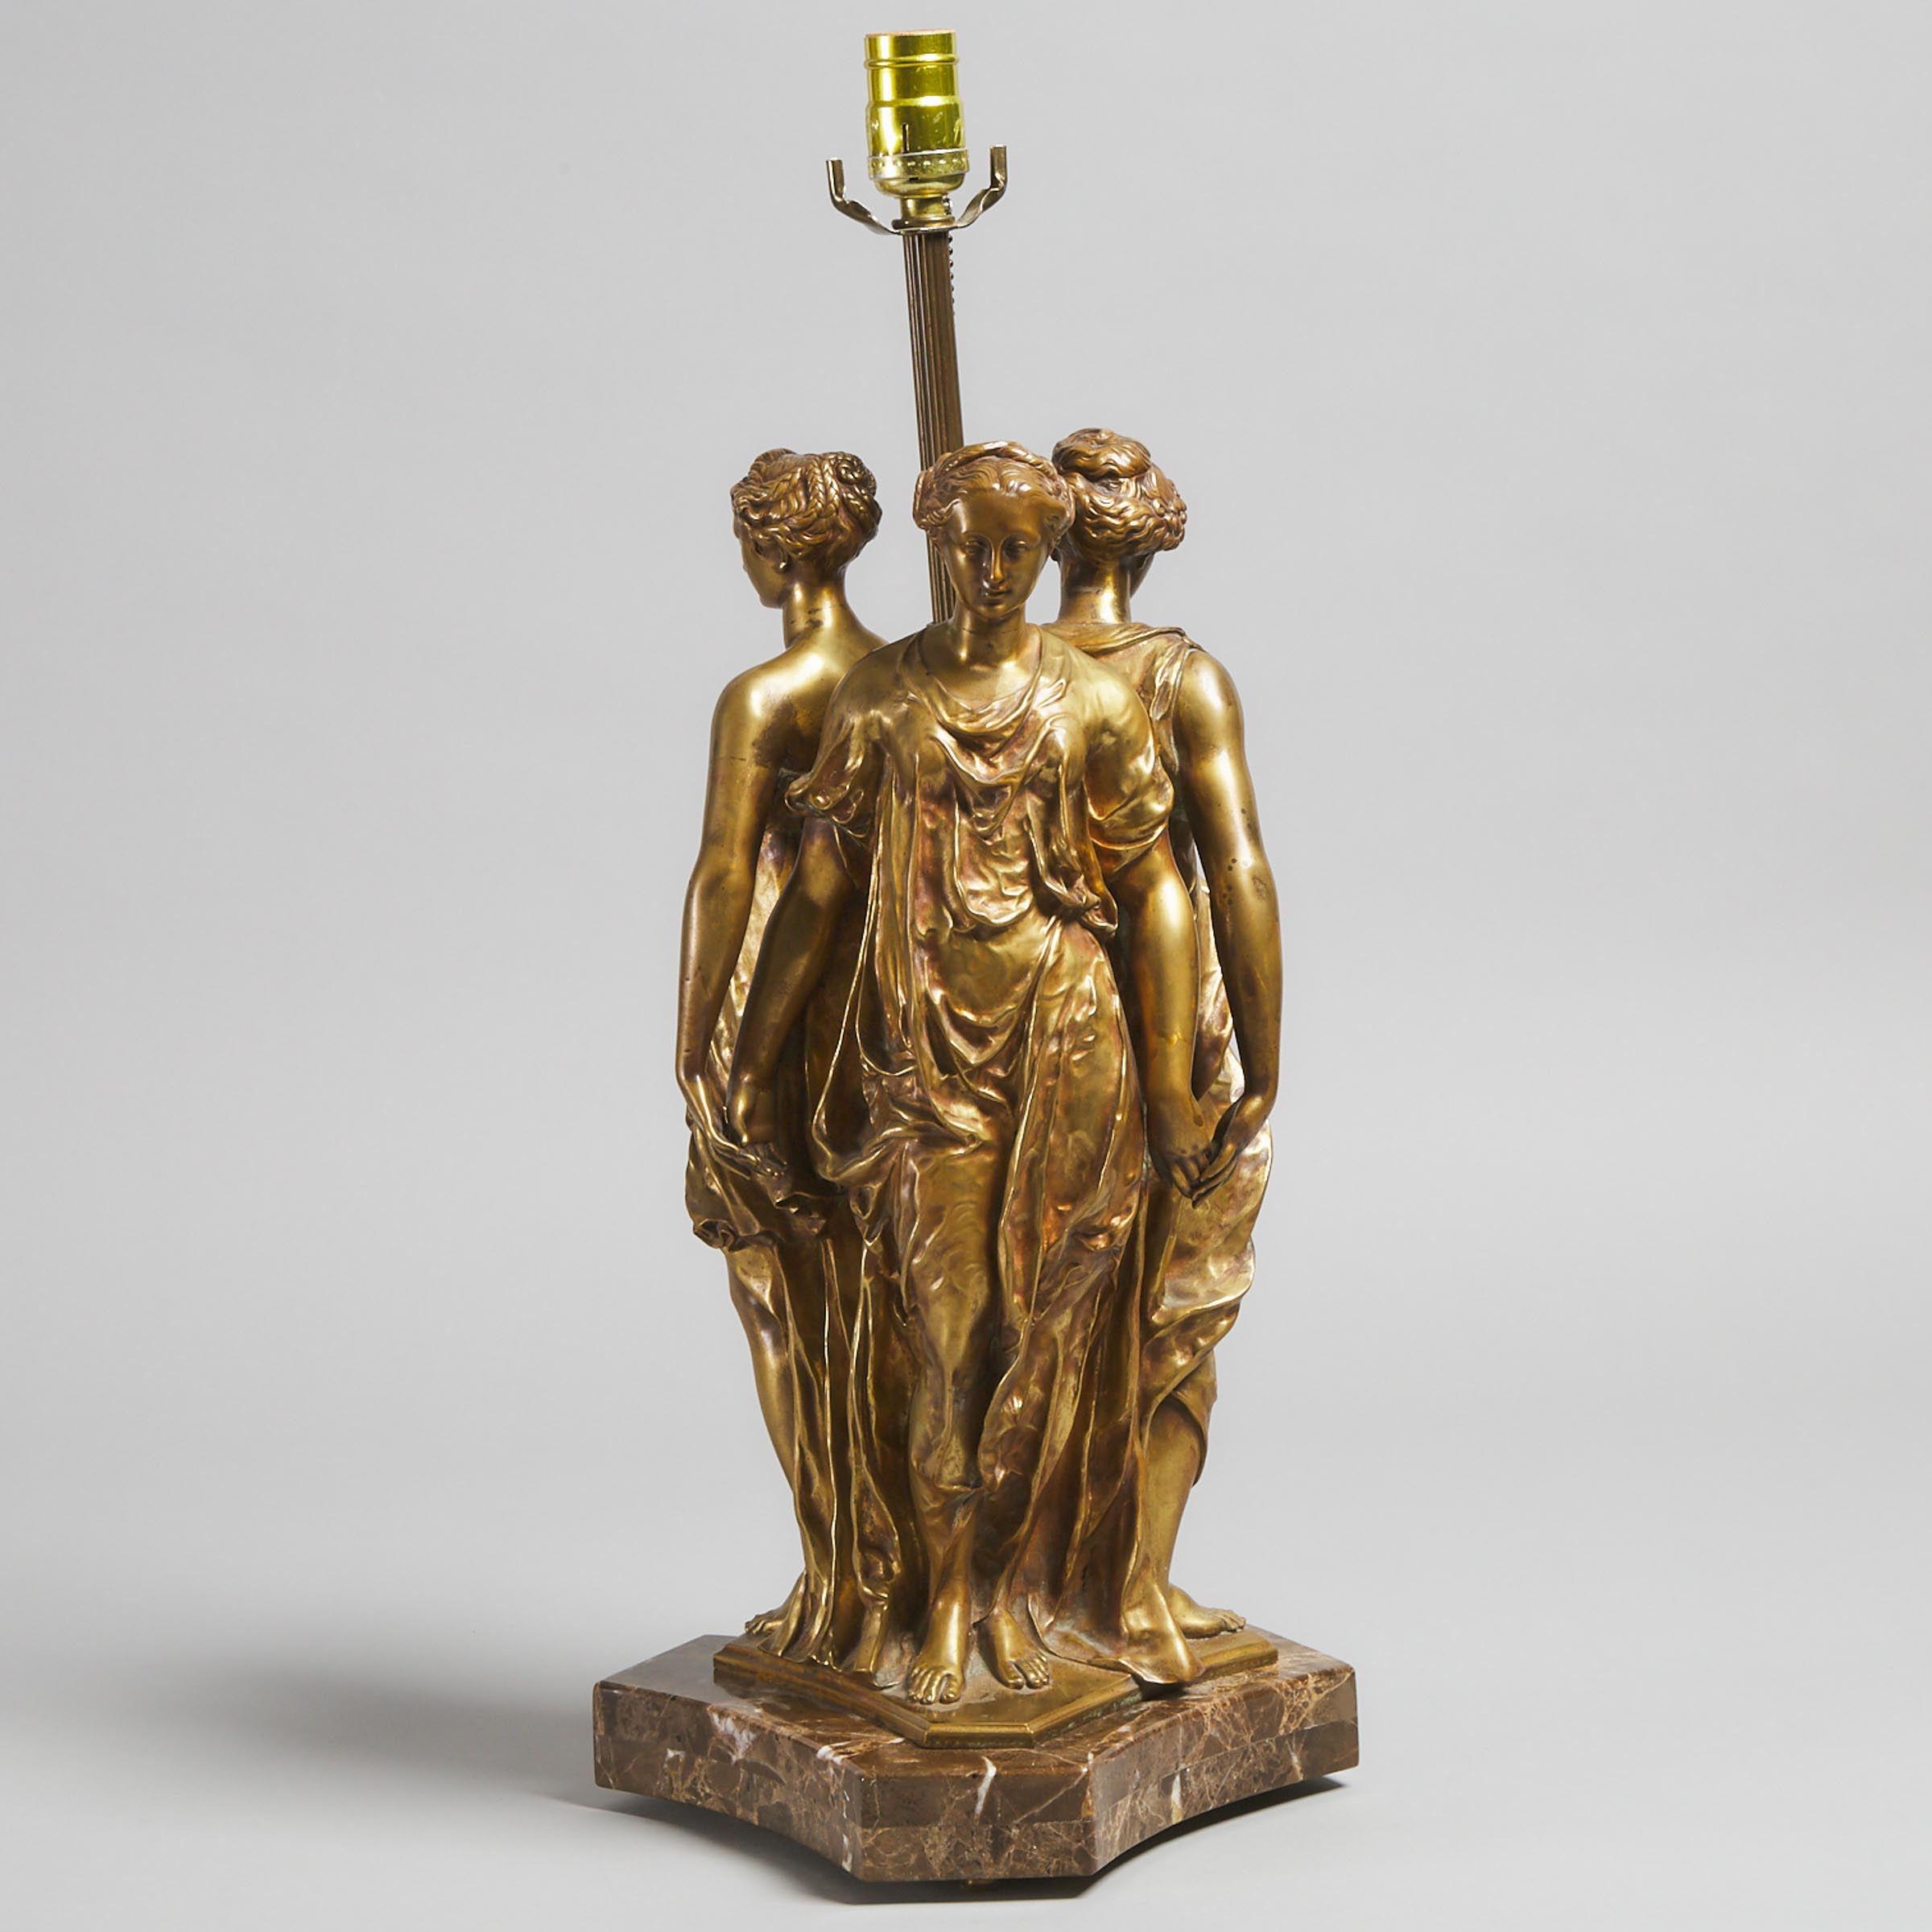 French Gilt Bronze 'Three Graces' Figural Table Lamp after Germain Pilon (c.1525-1590), c.1900